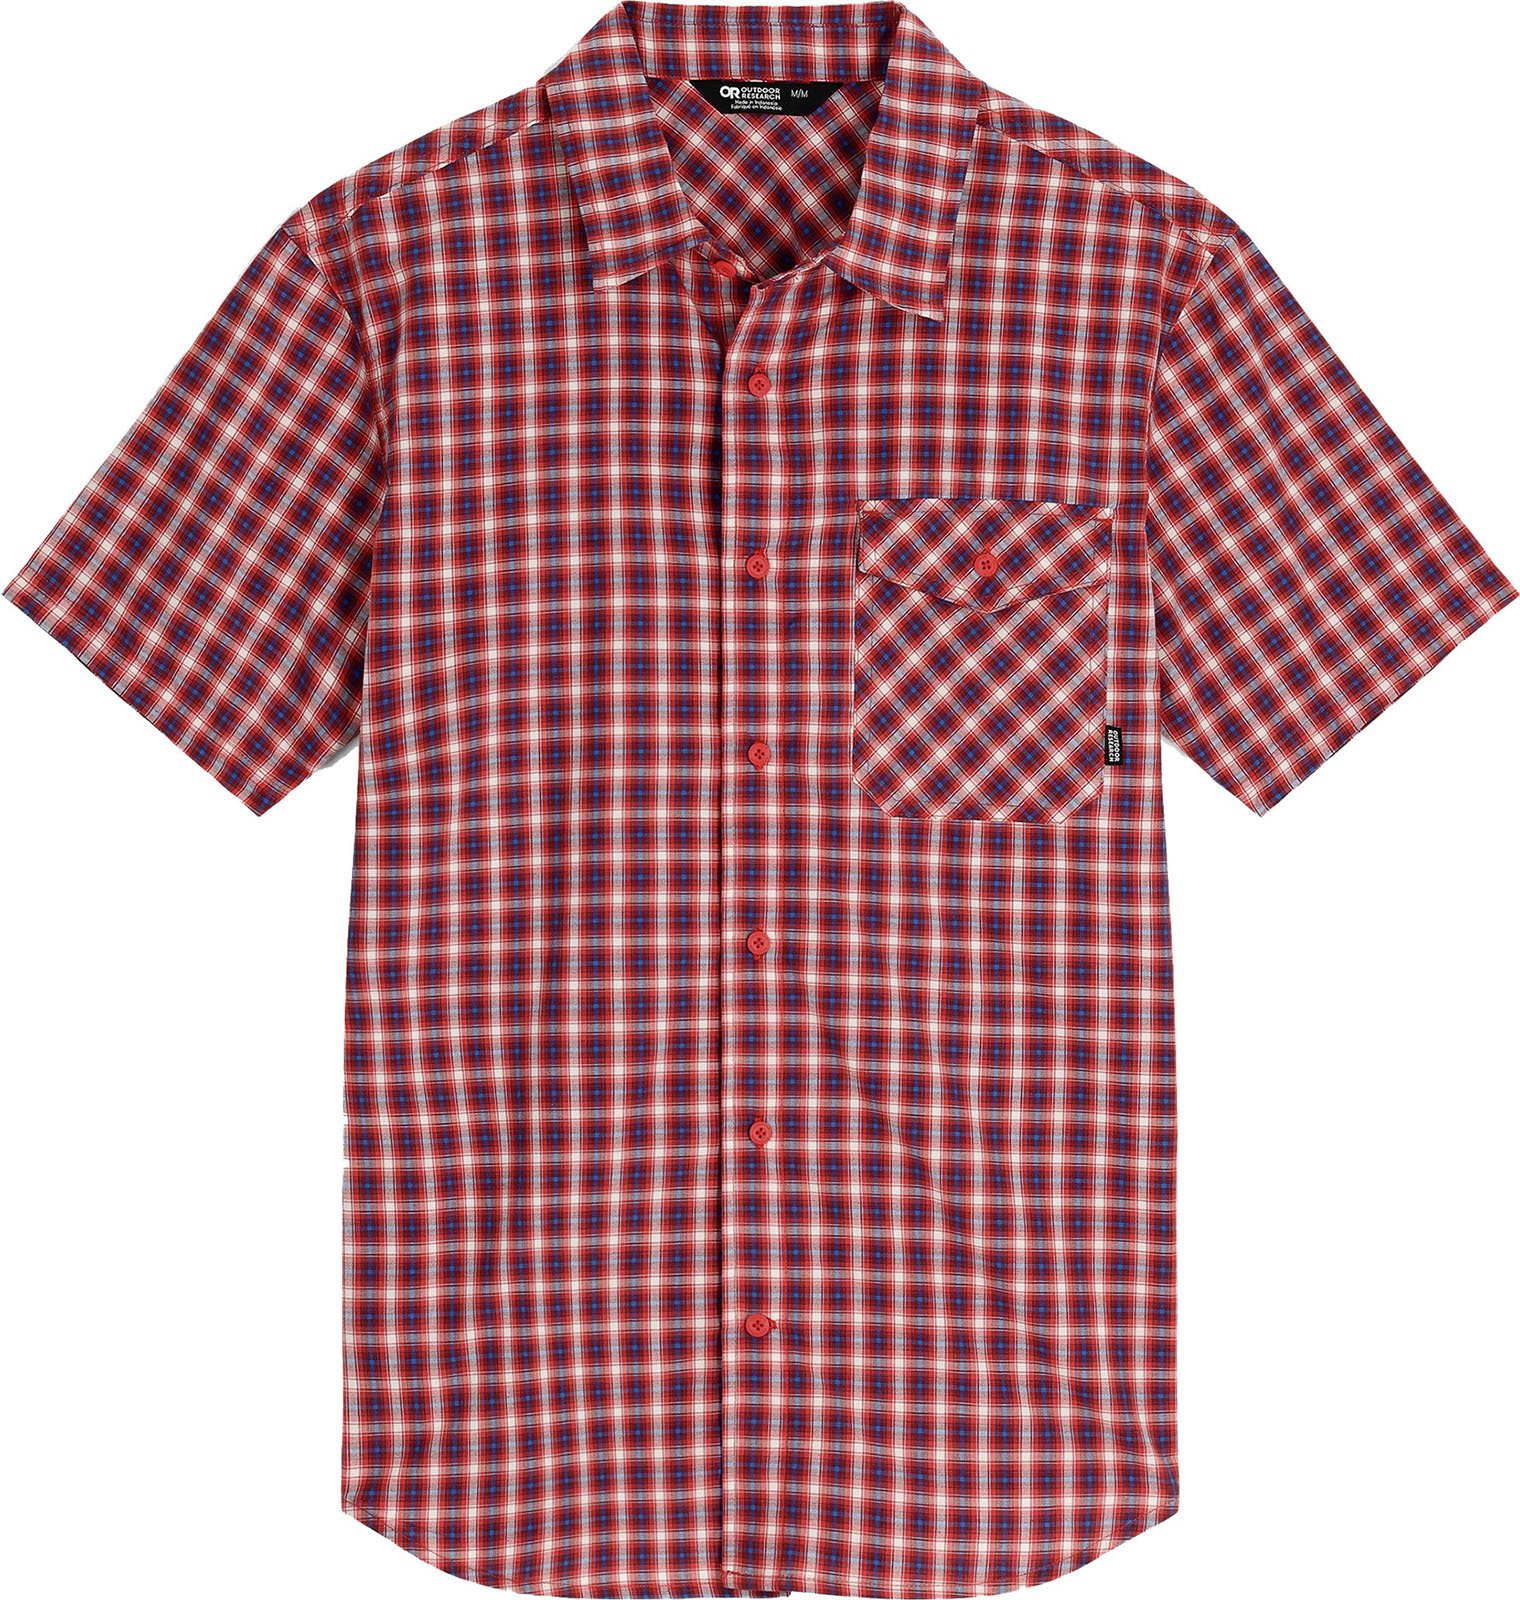 Outdoor Research Seapine Short Sleeve Shirt - Men's